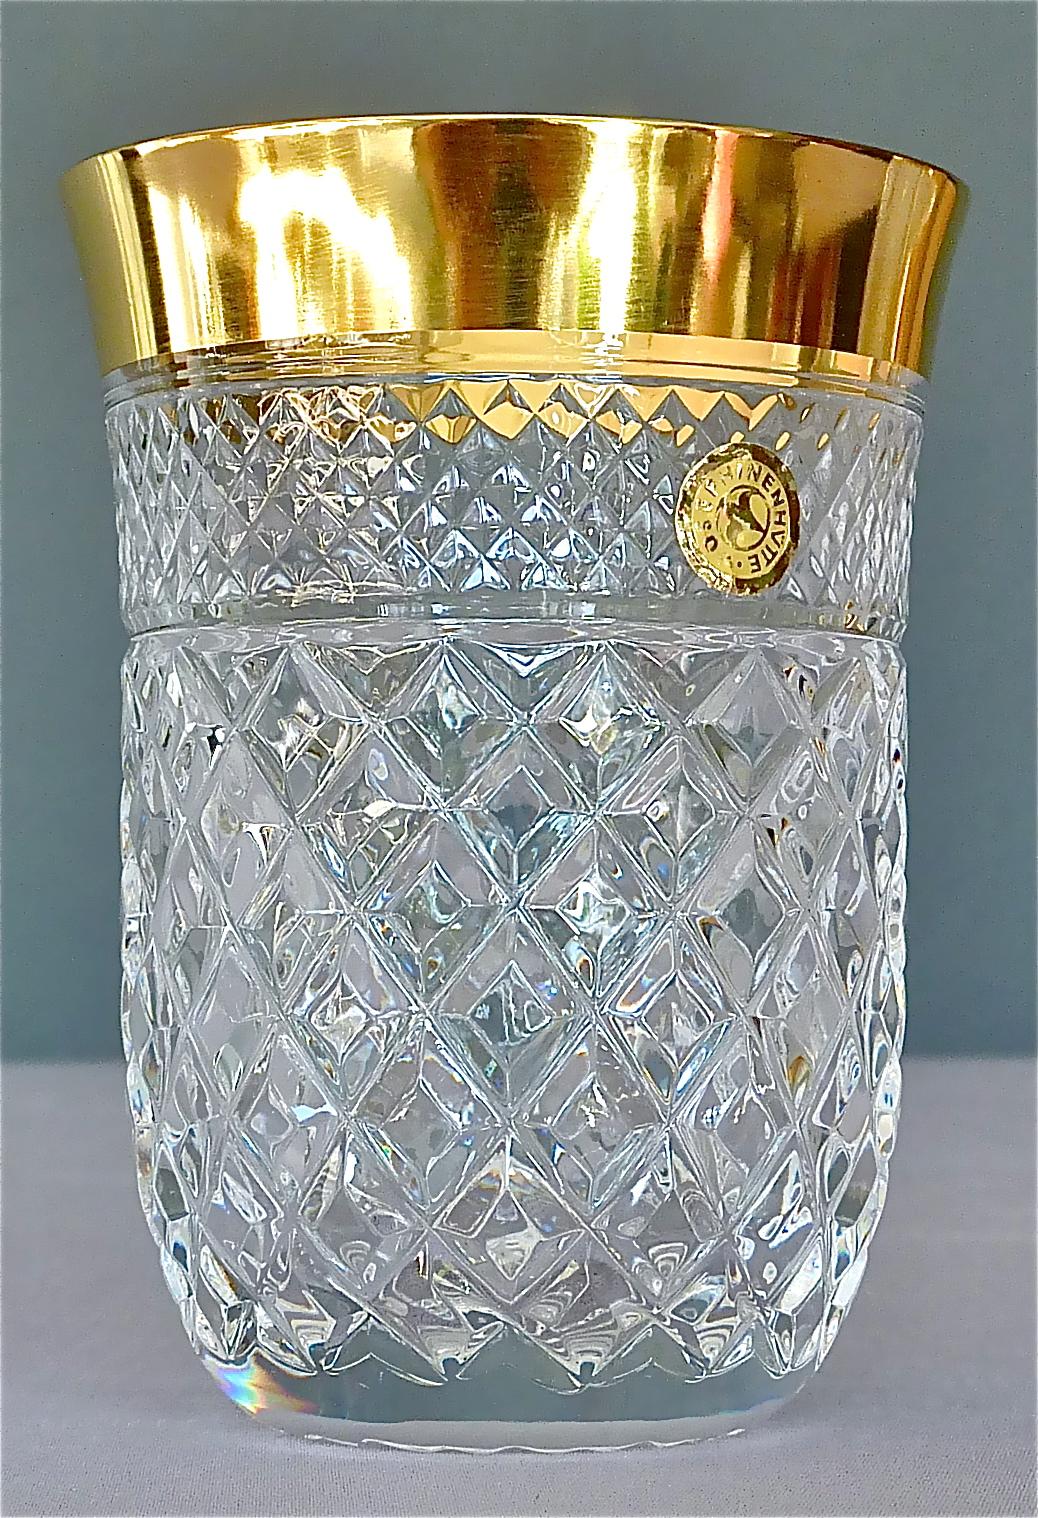 Precious 6 Water Glasses Gold Crystal Glass Tumbler Josephinenhuette Moser 4